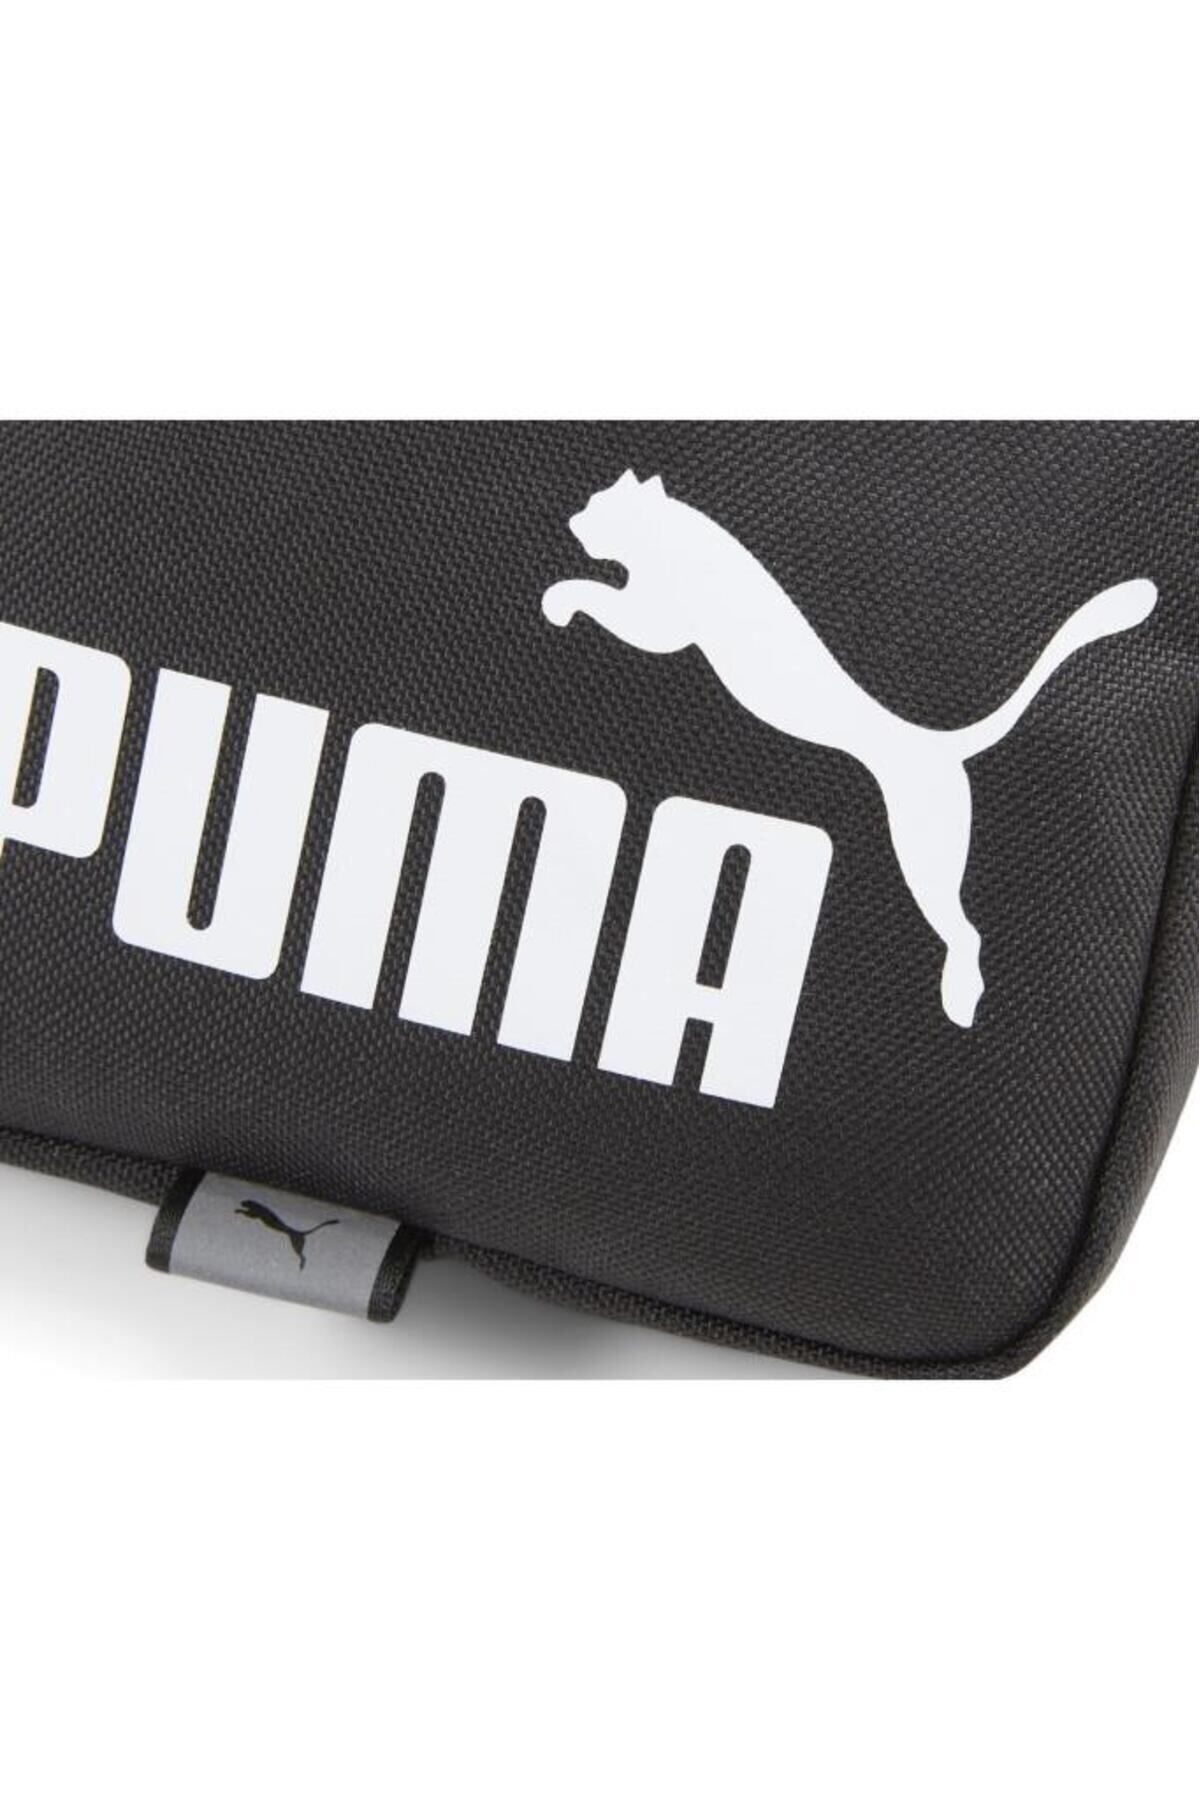 Puma Phase Portable Omuz Spor Çanta 07995501